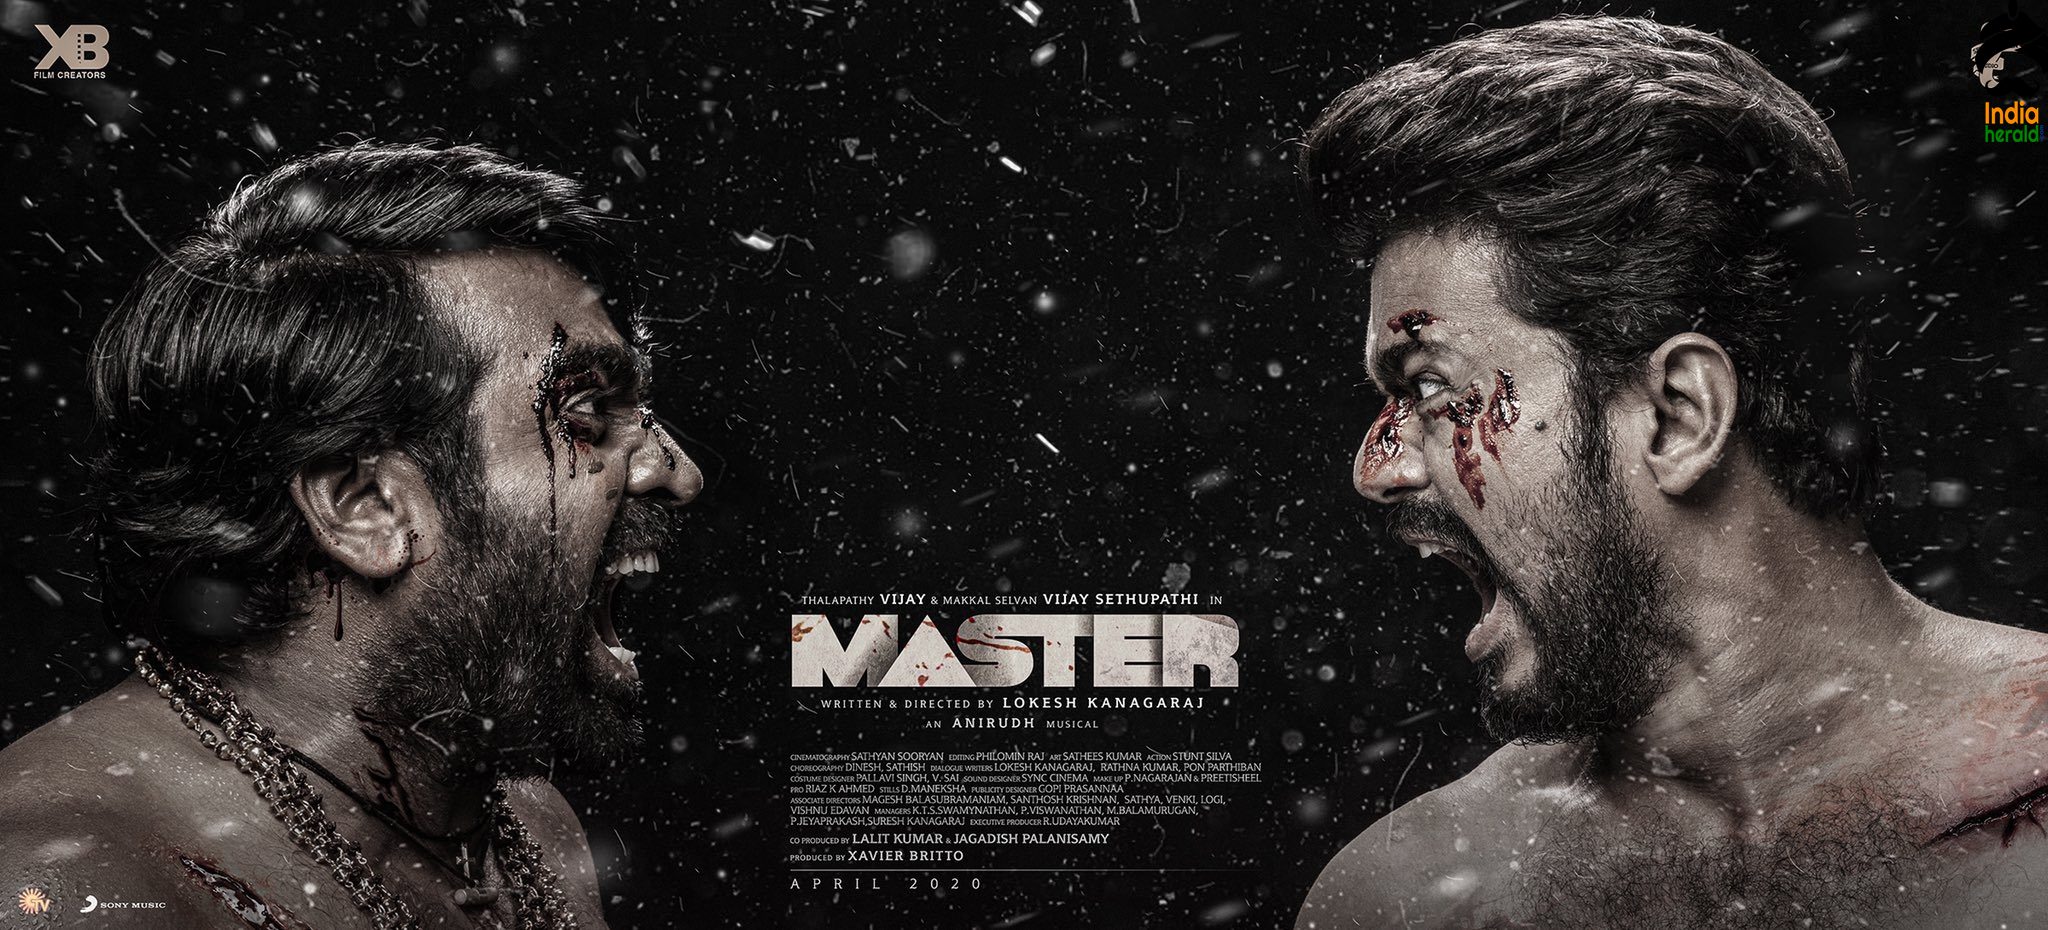 Third Poster of MASTER Movie